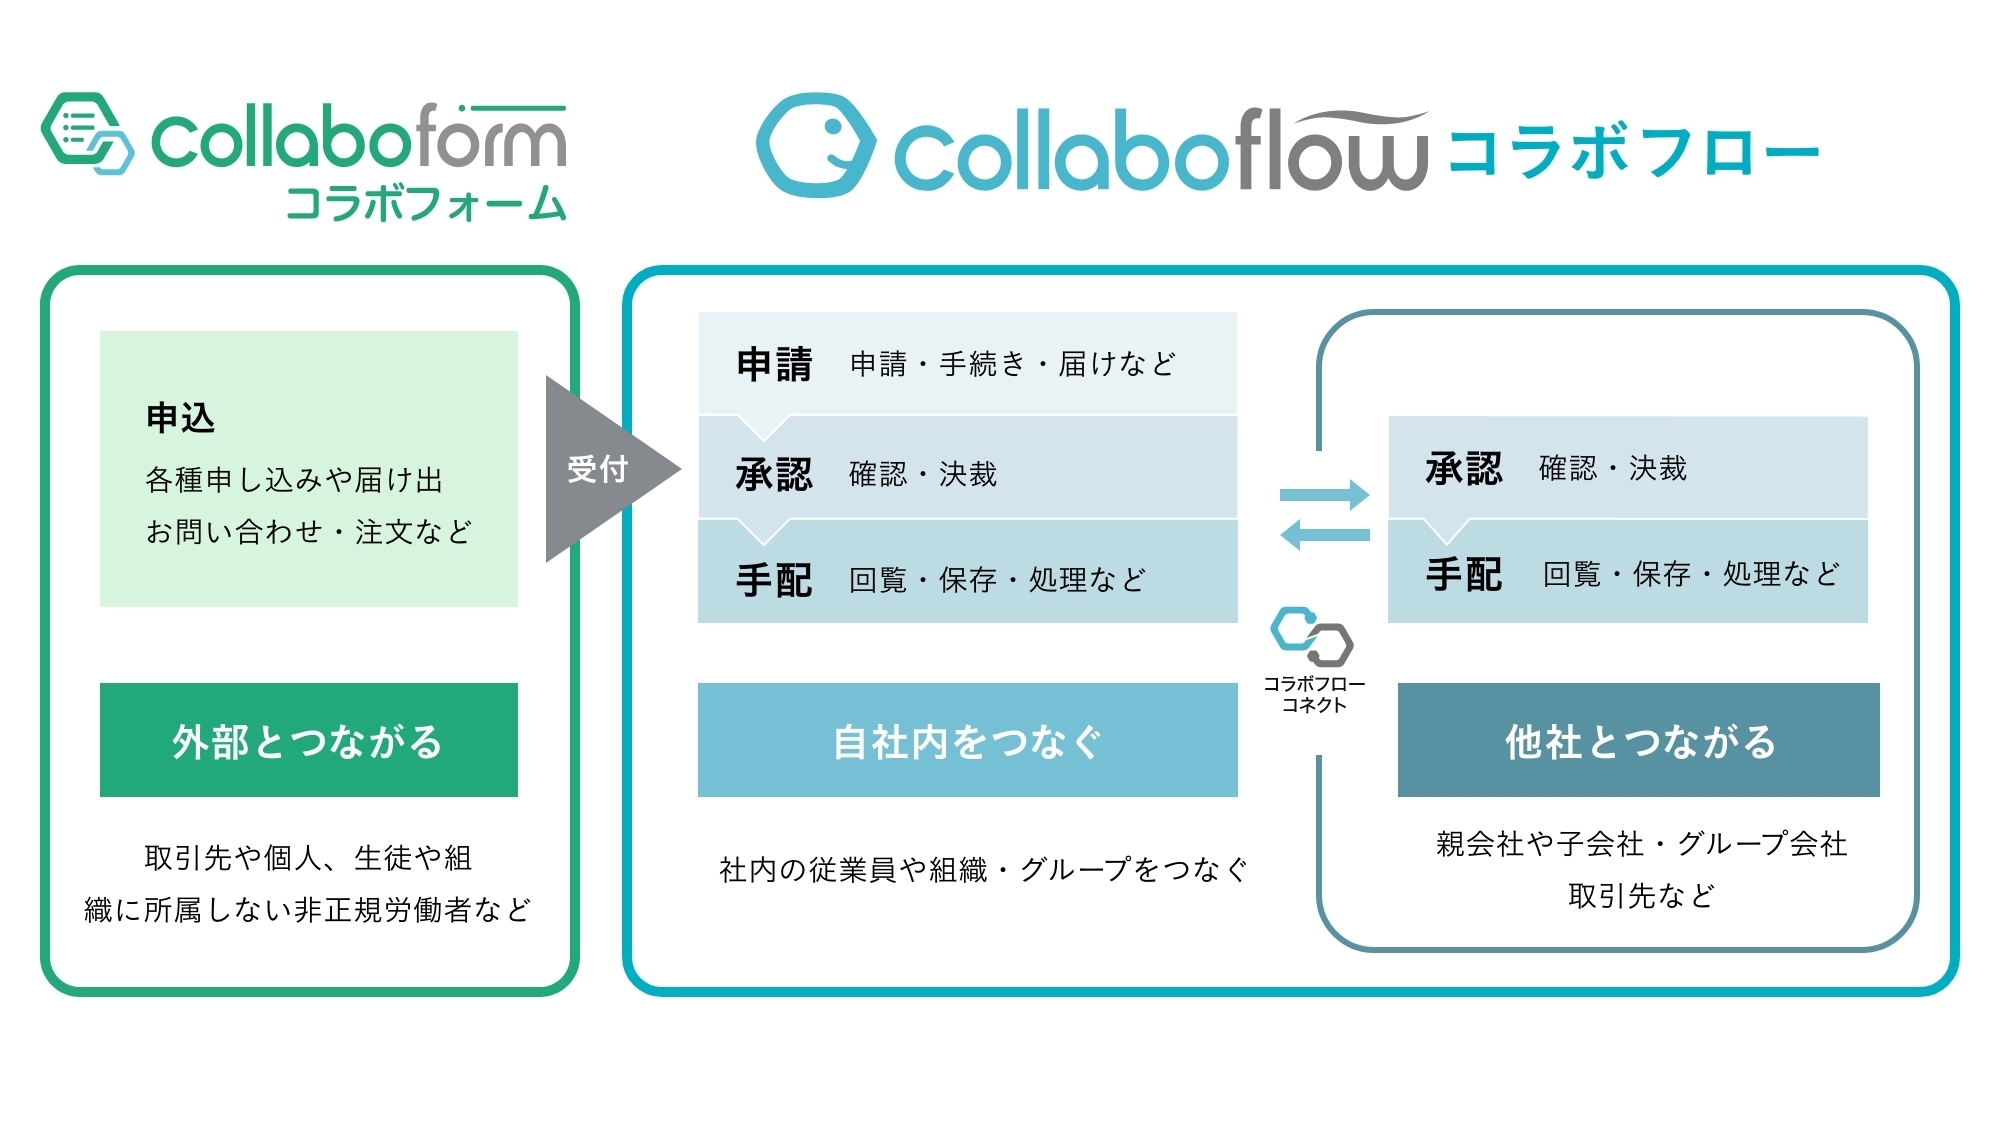 Collabo flow Collabo form